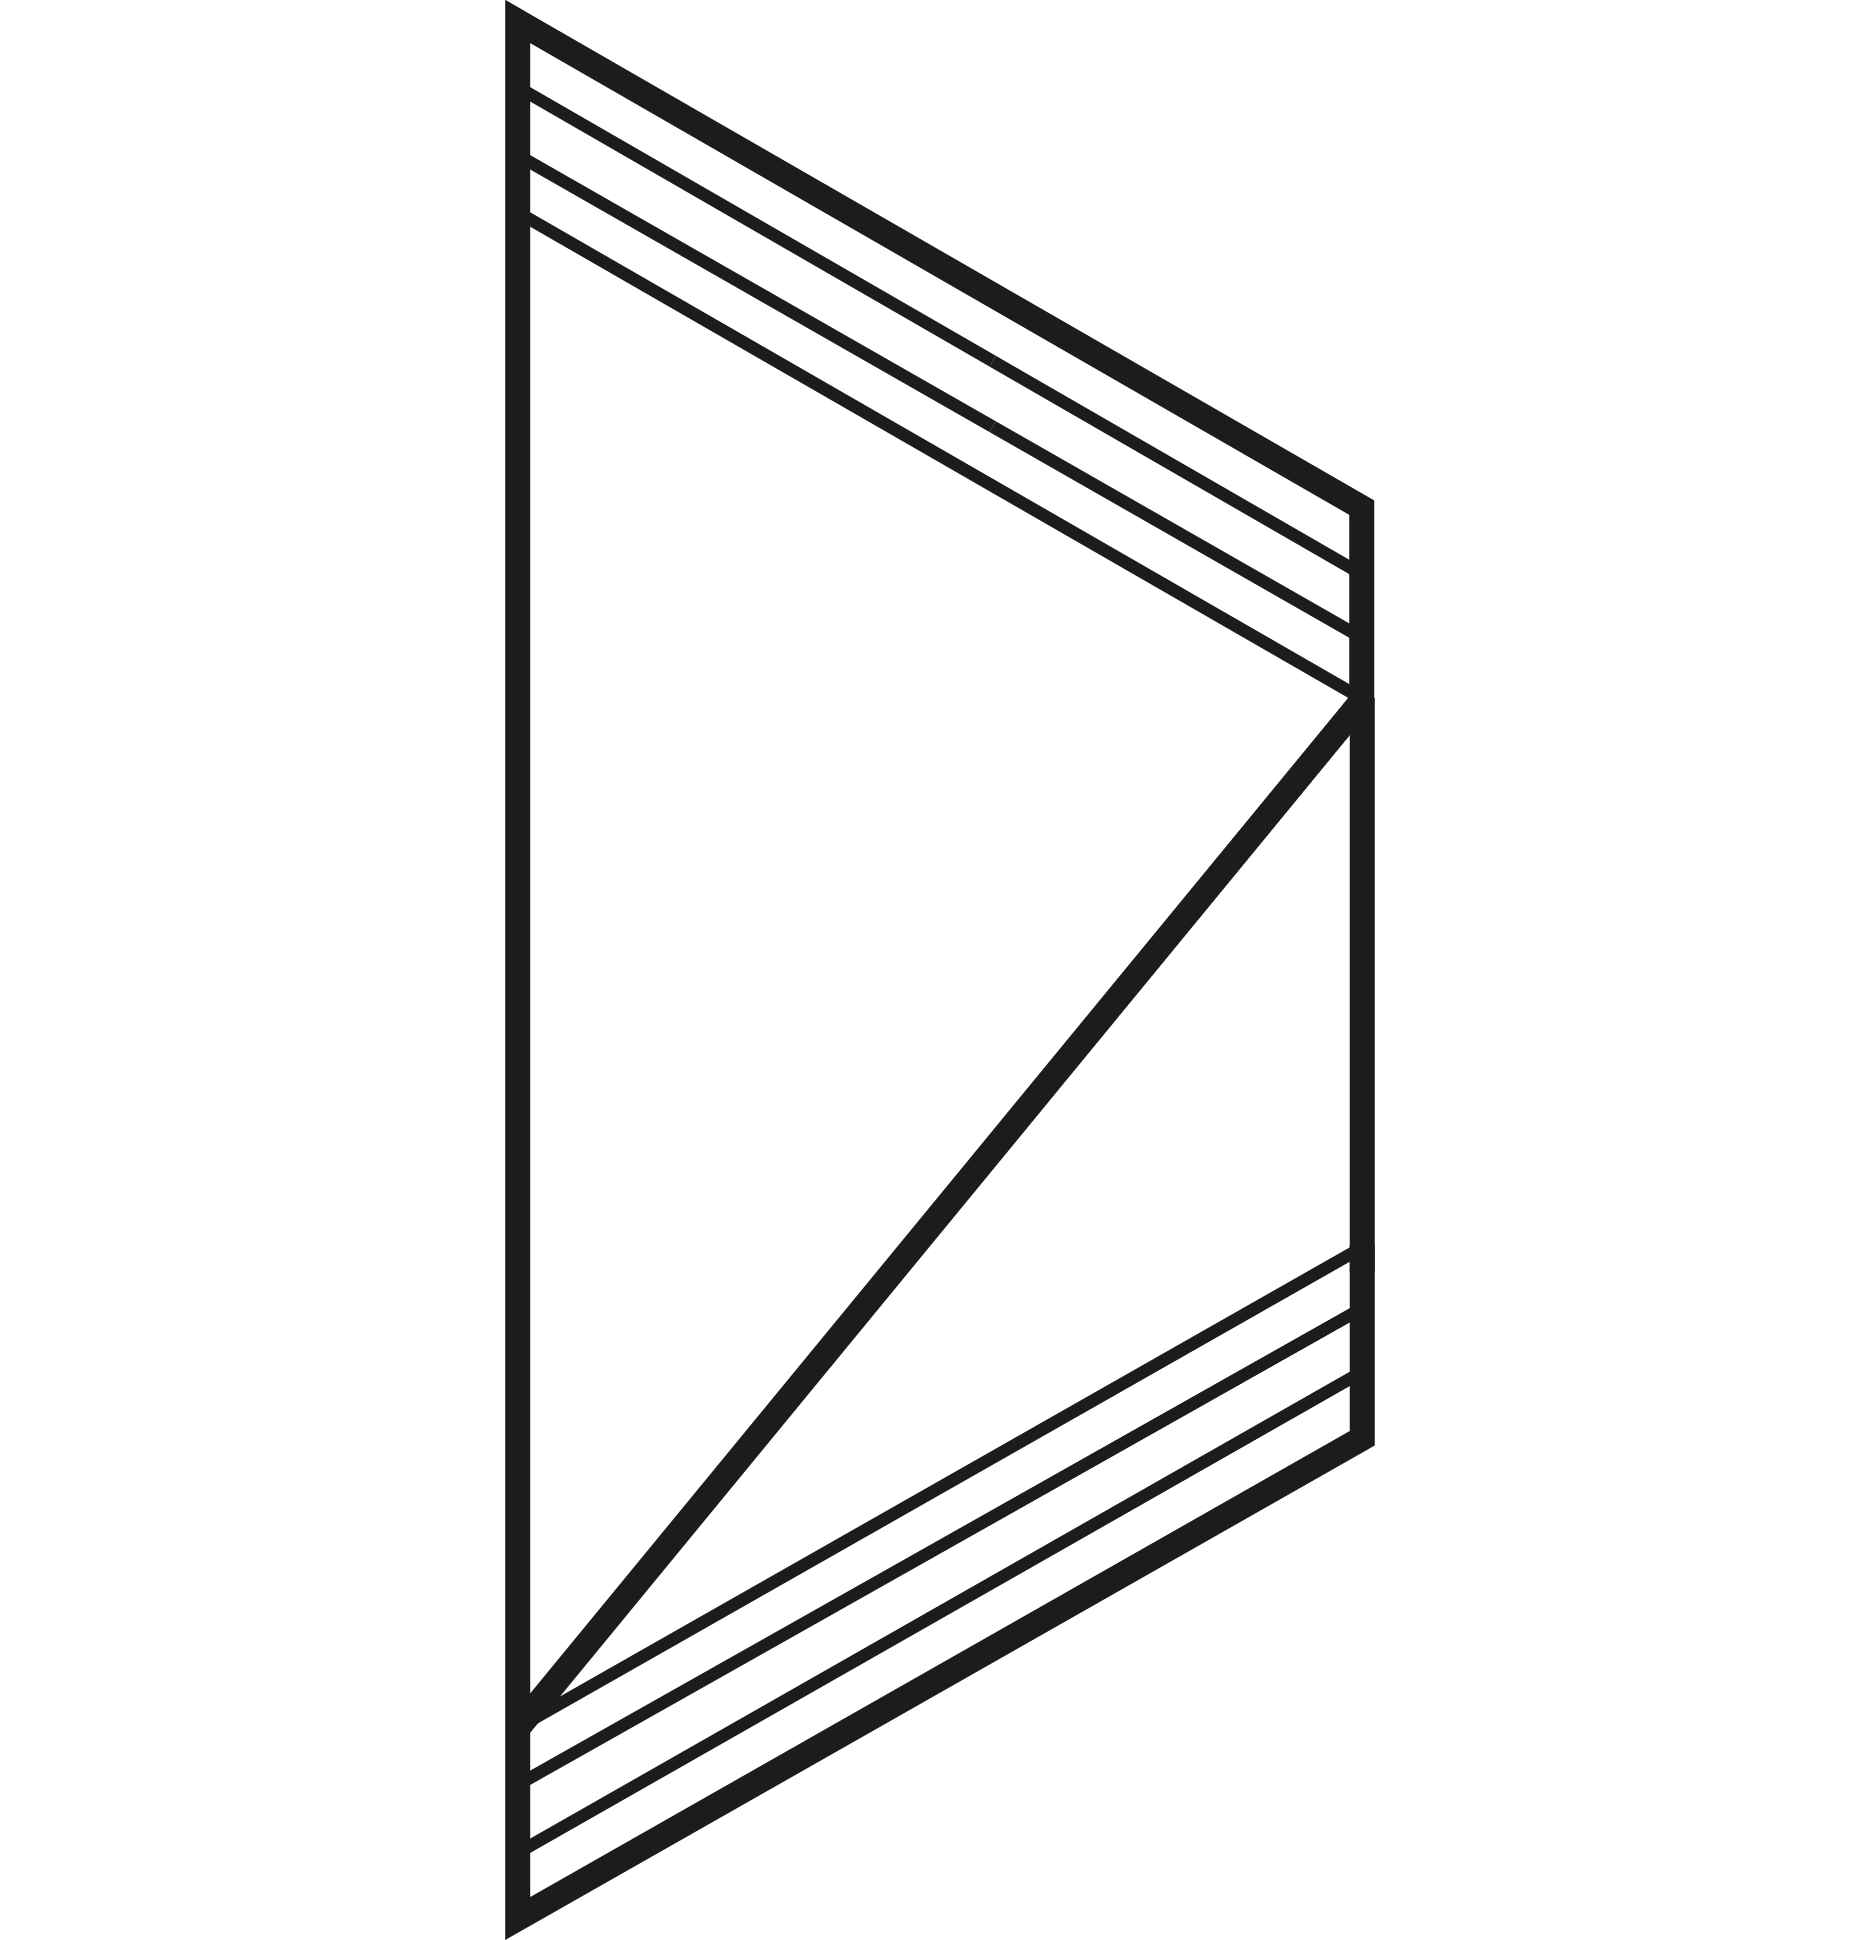 tetrahedron template printable